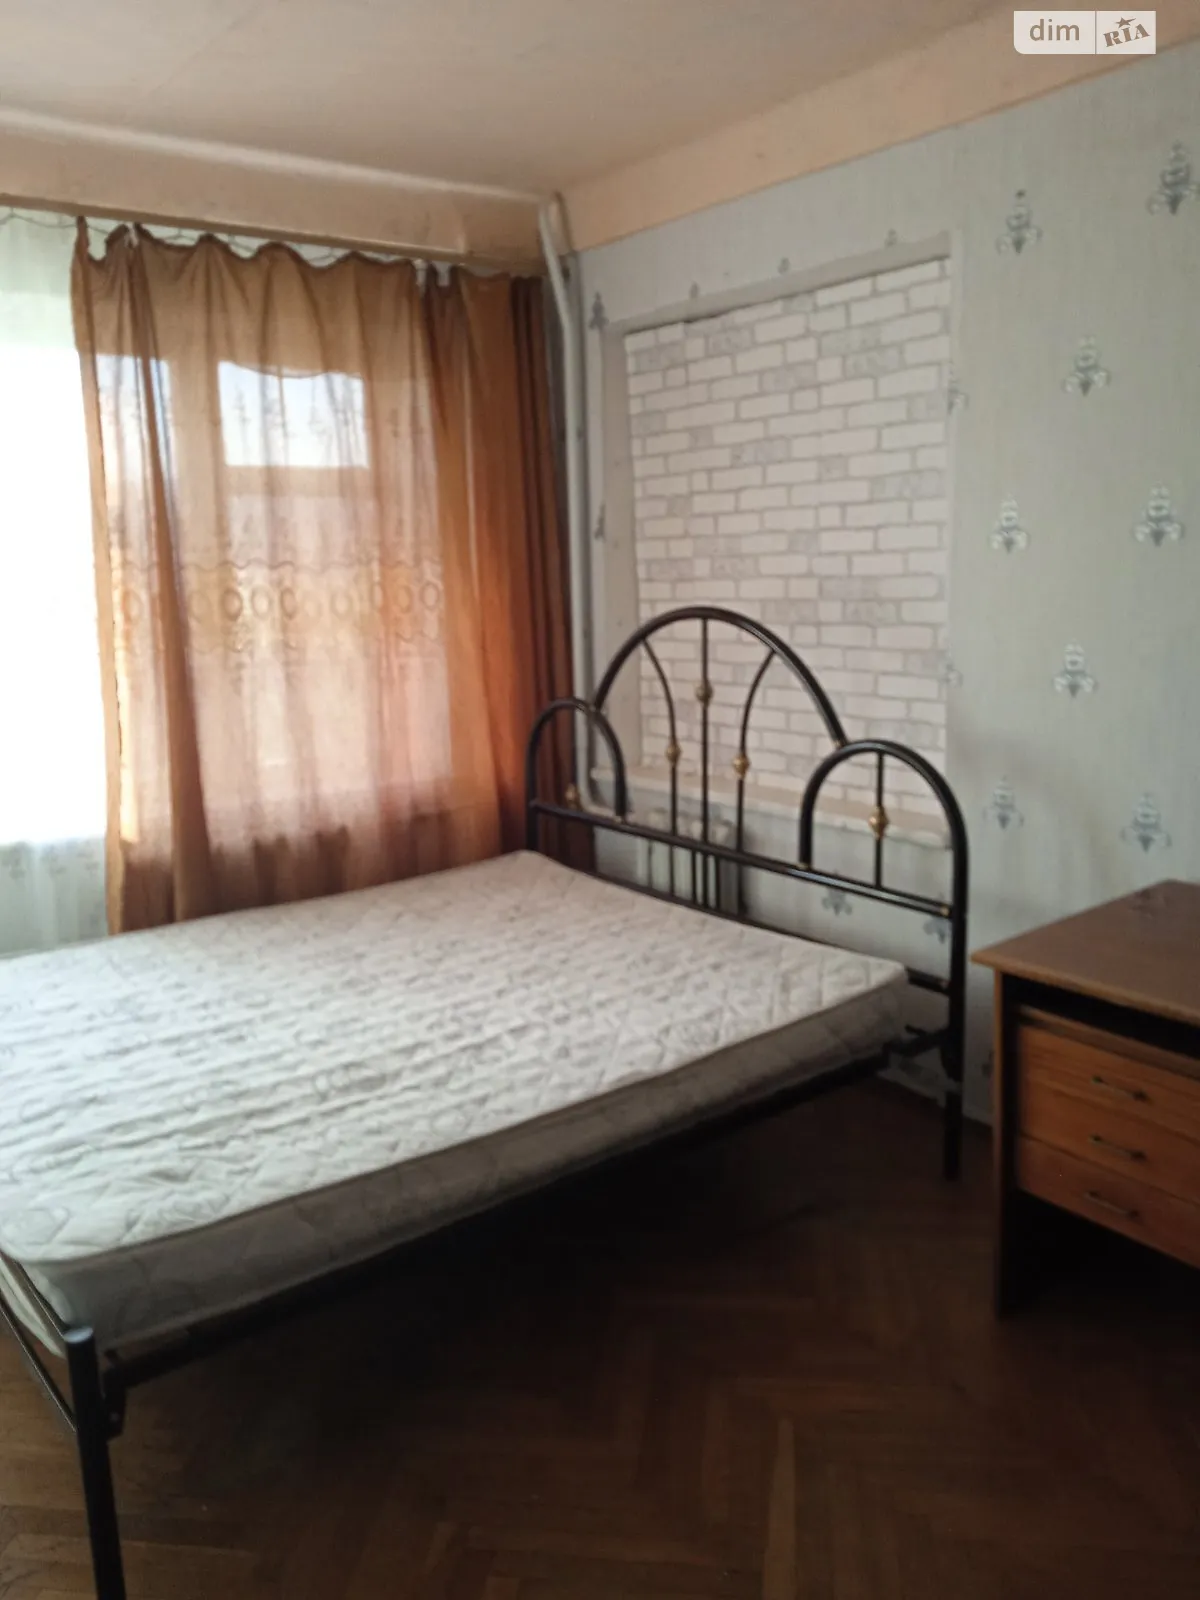 Сдается в аренду 2-комнатная квартира 50 кв. м в Киеве, ул. Кирилловская, 146 - фото 1